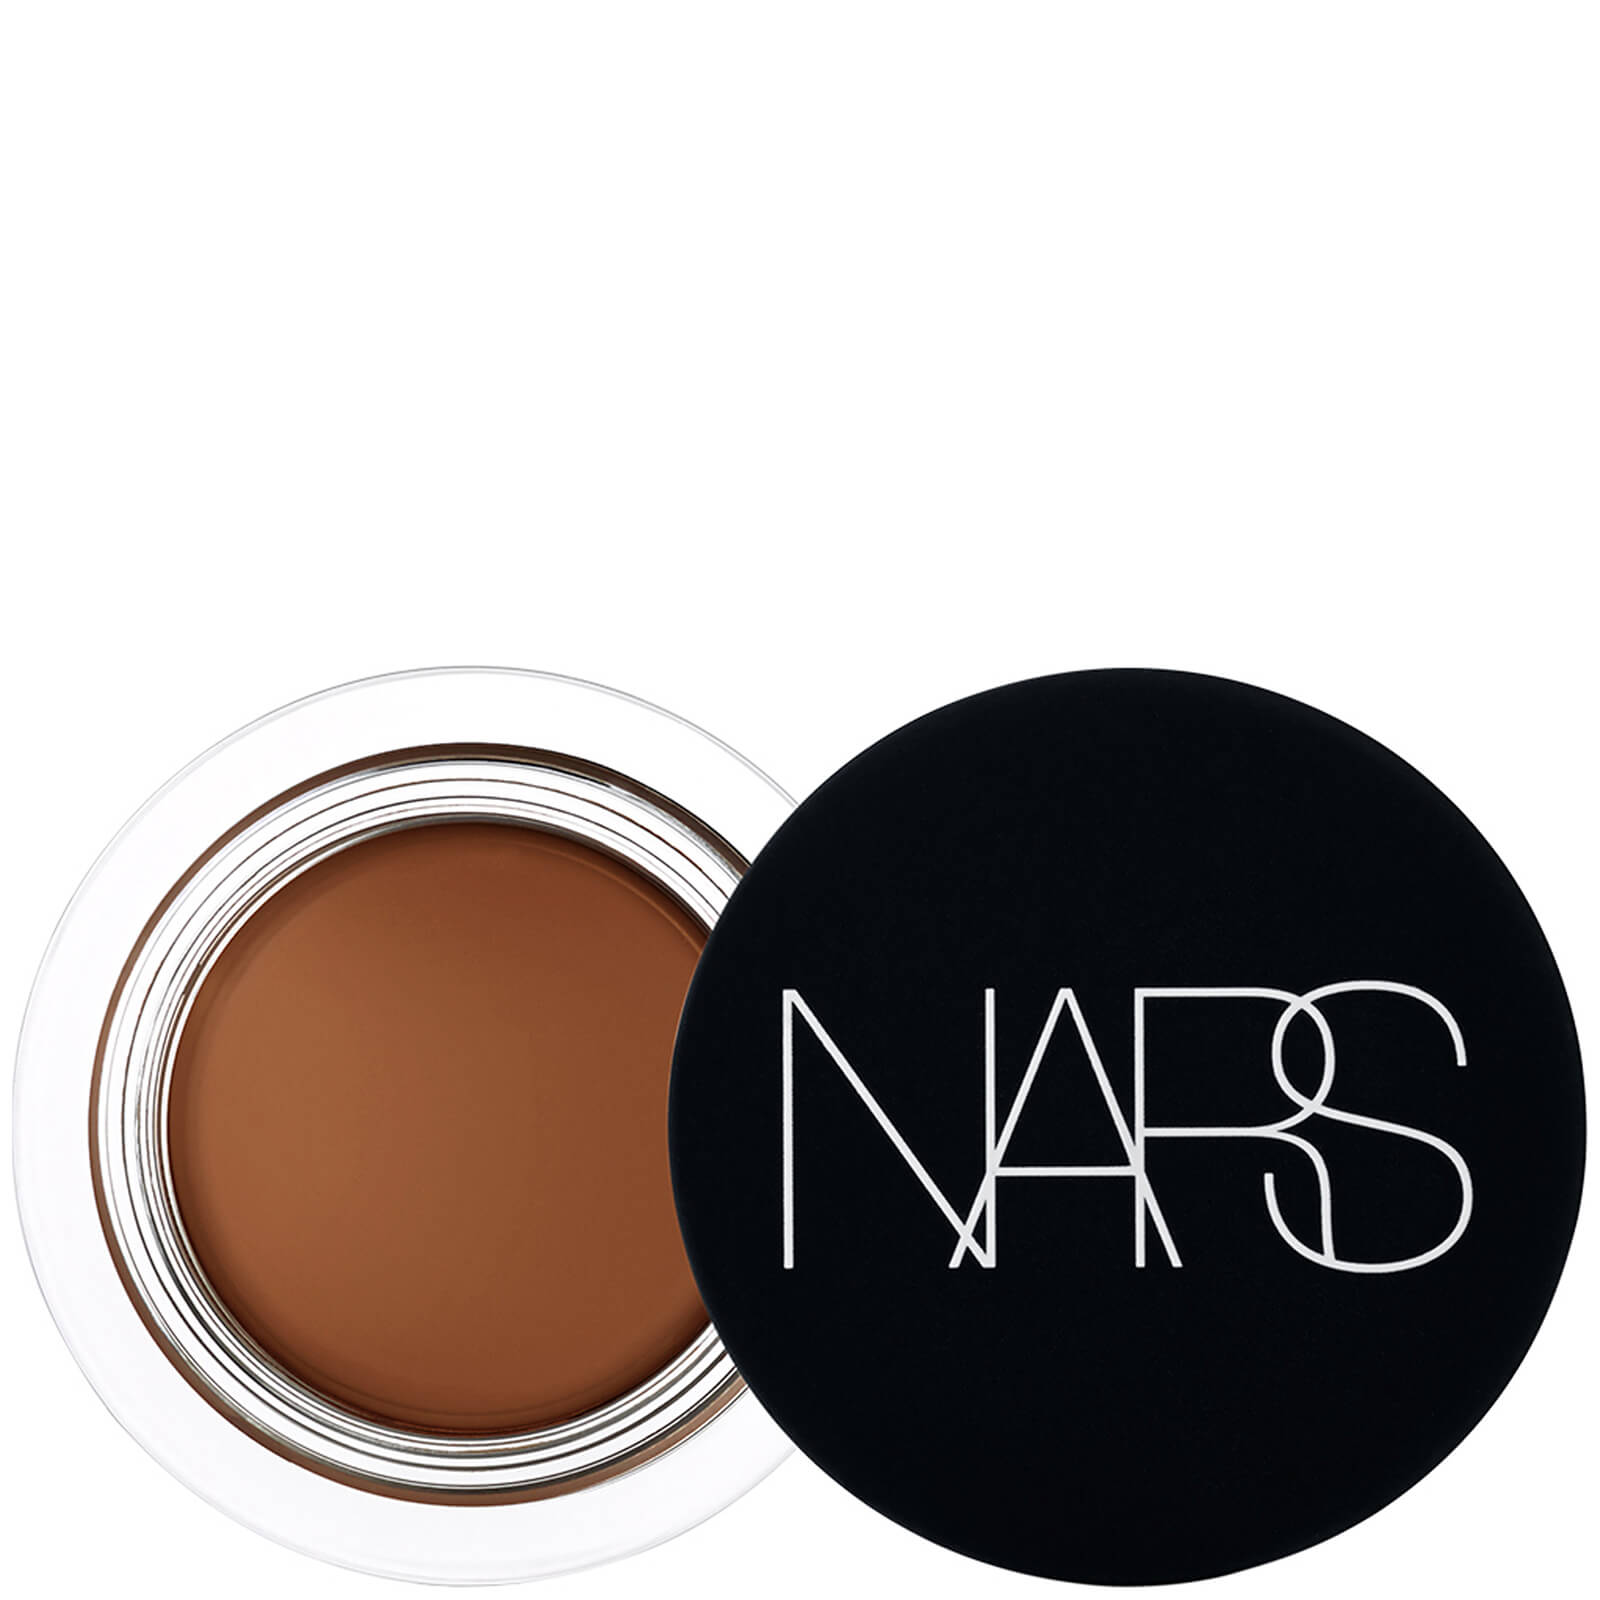 Nars Soft Matte Complete Concealer 6.2g (various Shades) - Dark Coffee